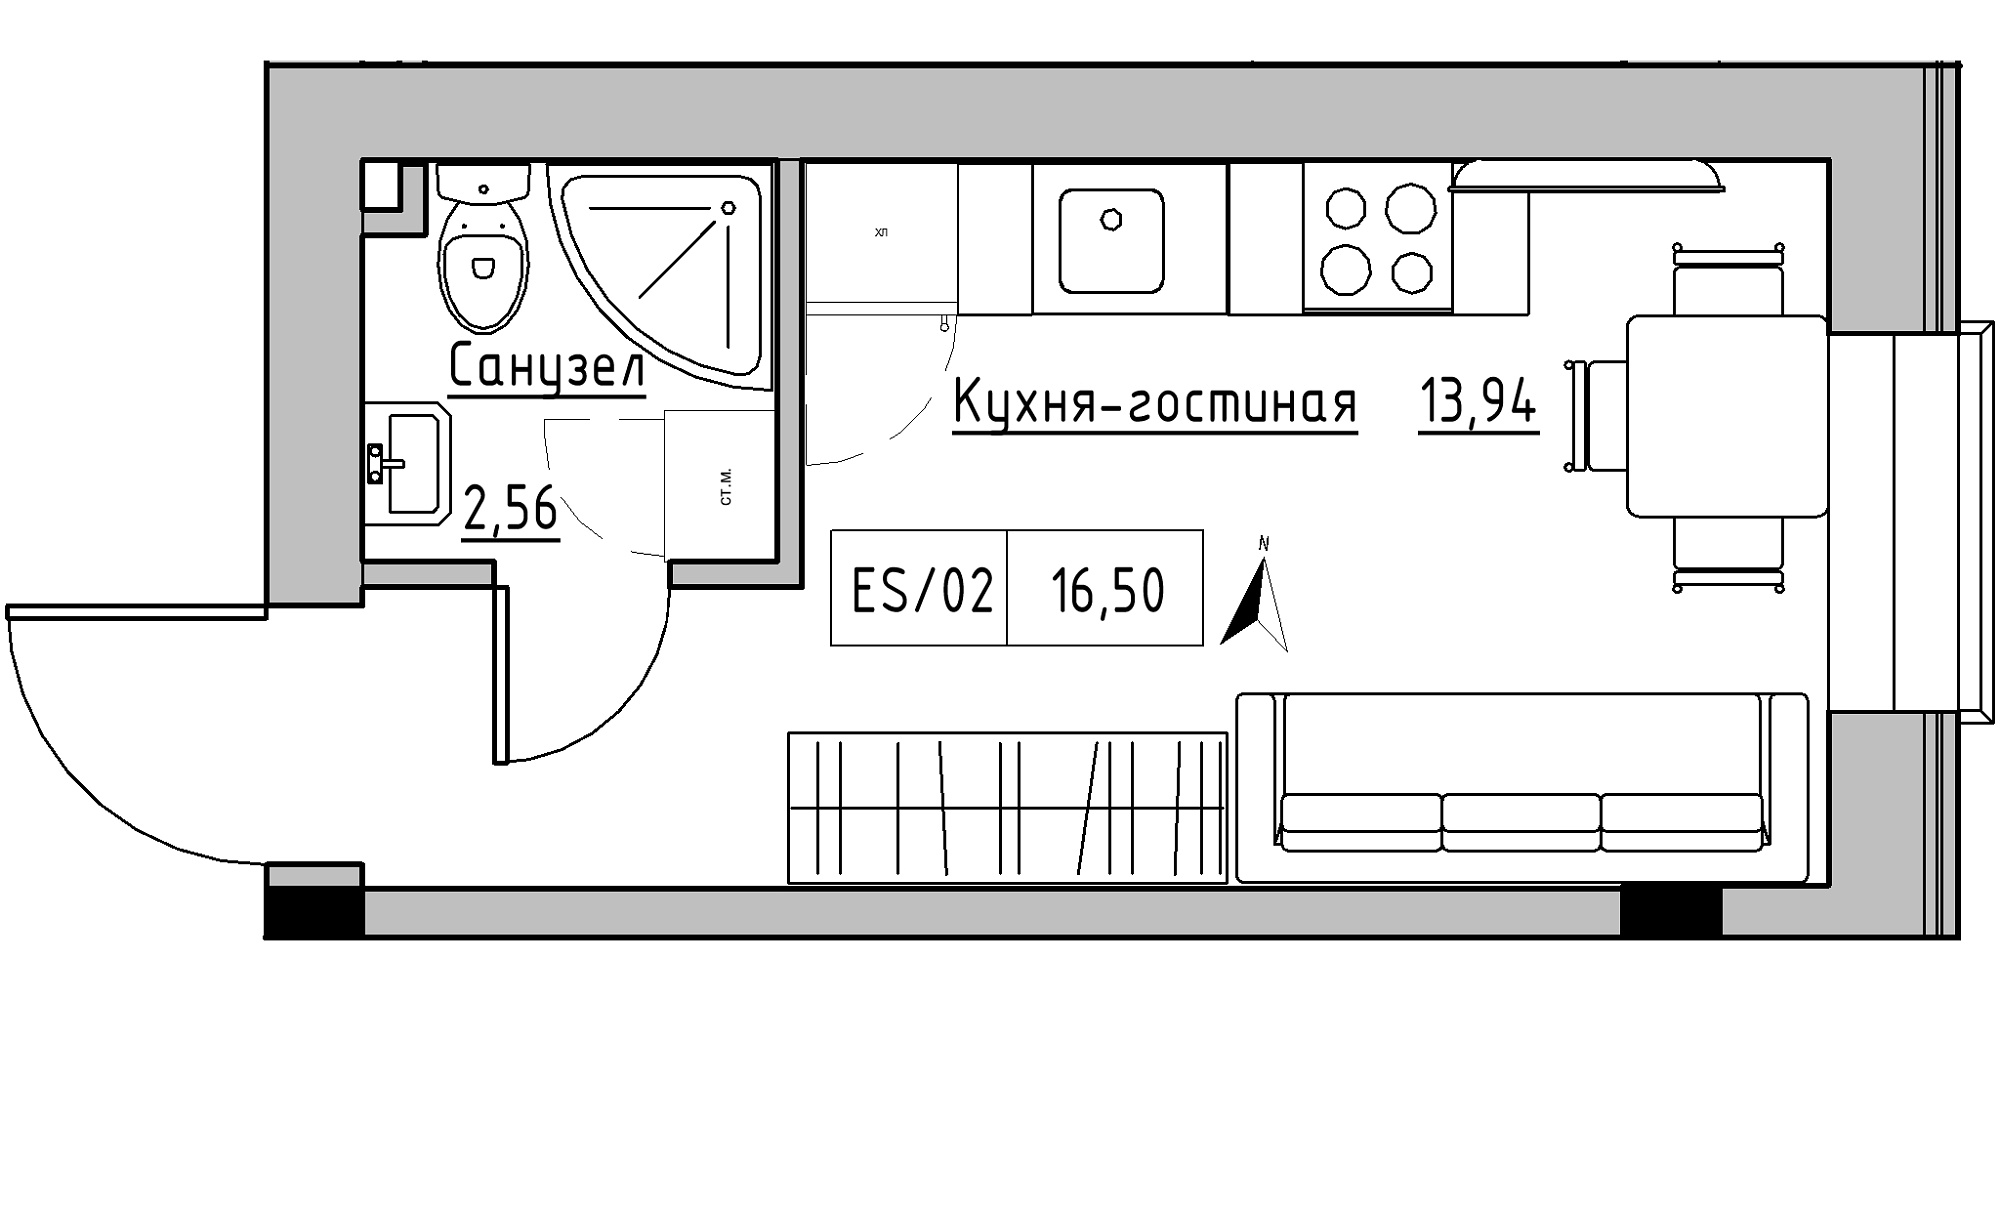 Planning Smart flats area 16.5m2, KS-015-02/0005.